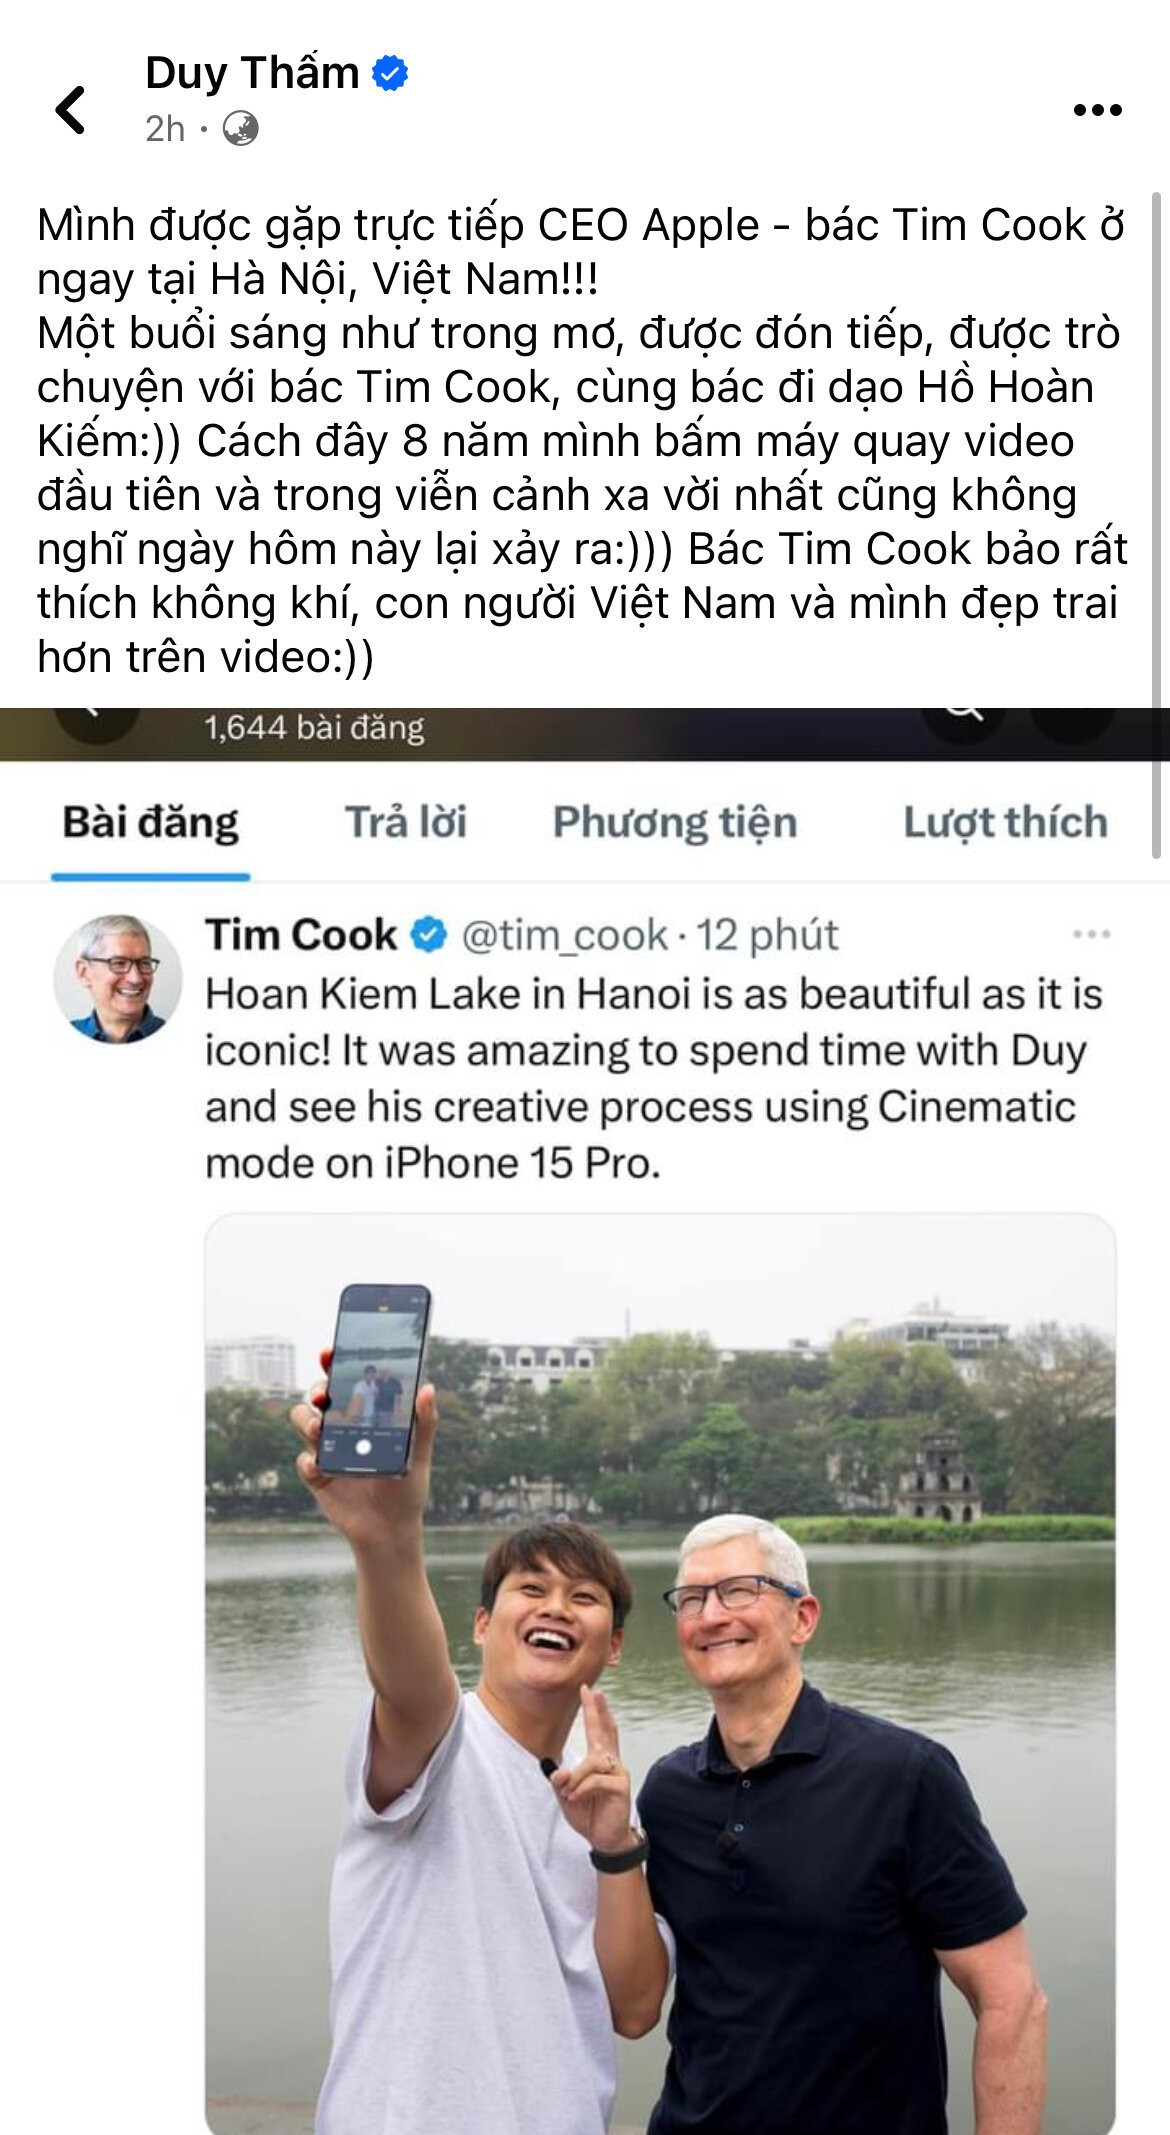 KOL Duy Thẩm chia sẻ khoảnh khắc gặp CEO Apple. (Ảnh: Facebook Duy Thẩm)